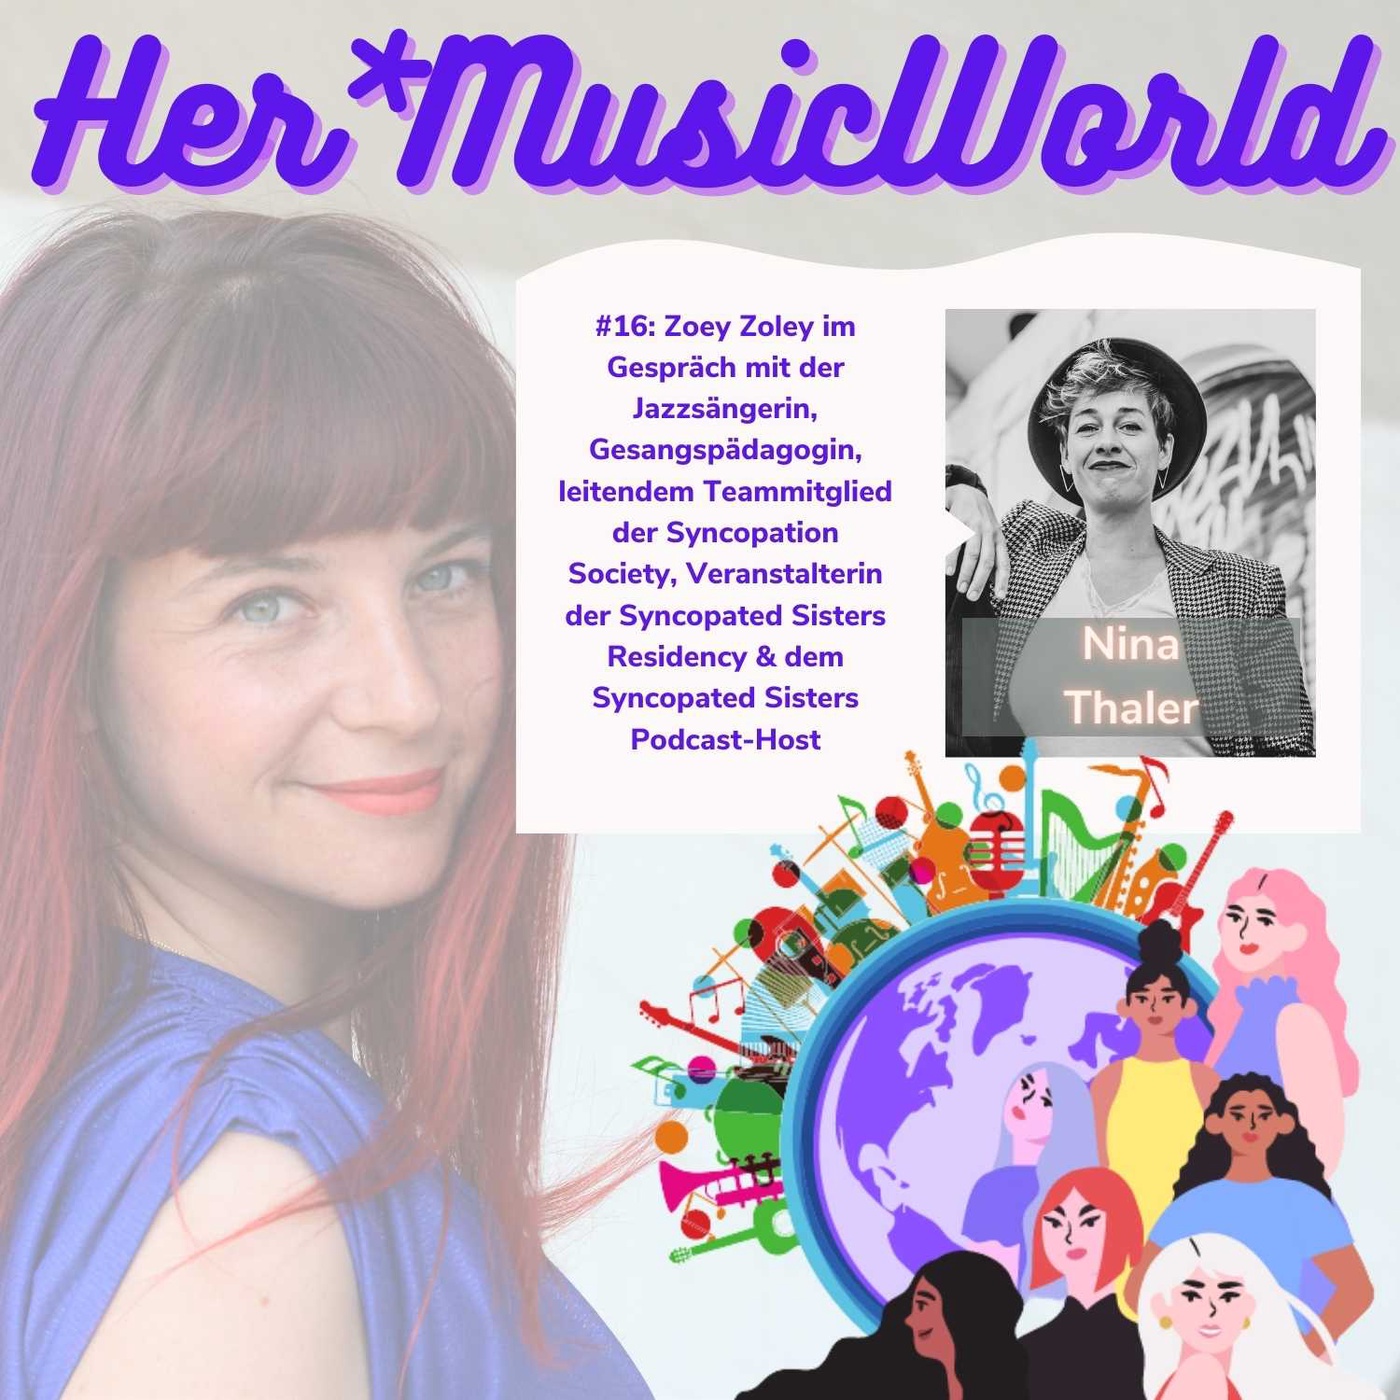 #16 HerMusicWorld Podcast mit Gästin Nina Thaler